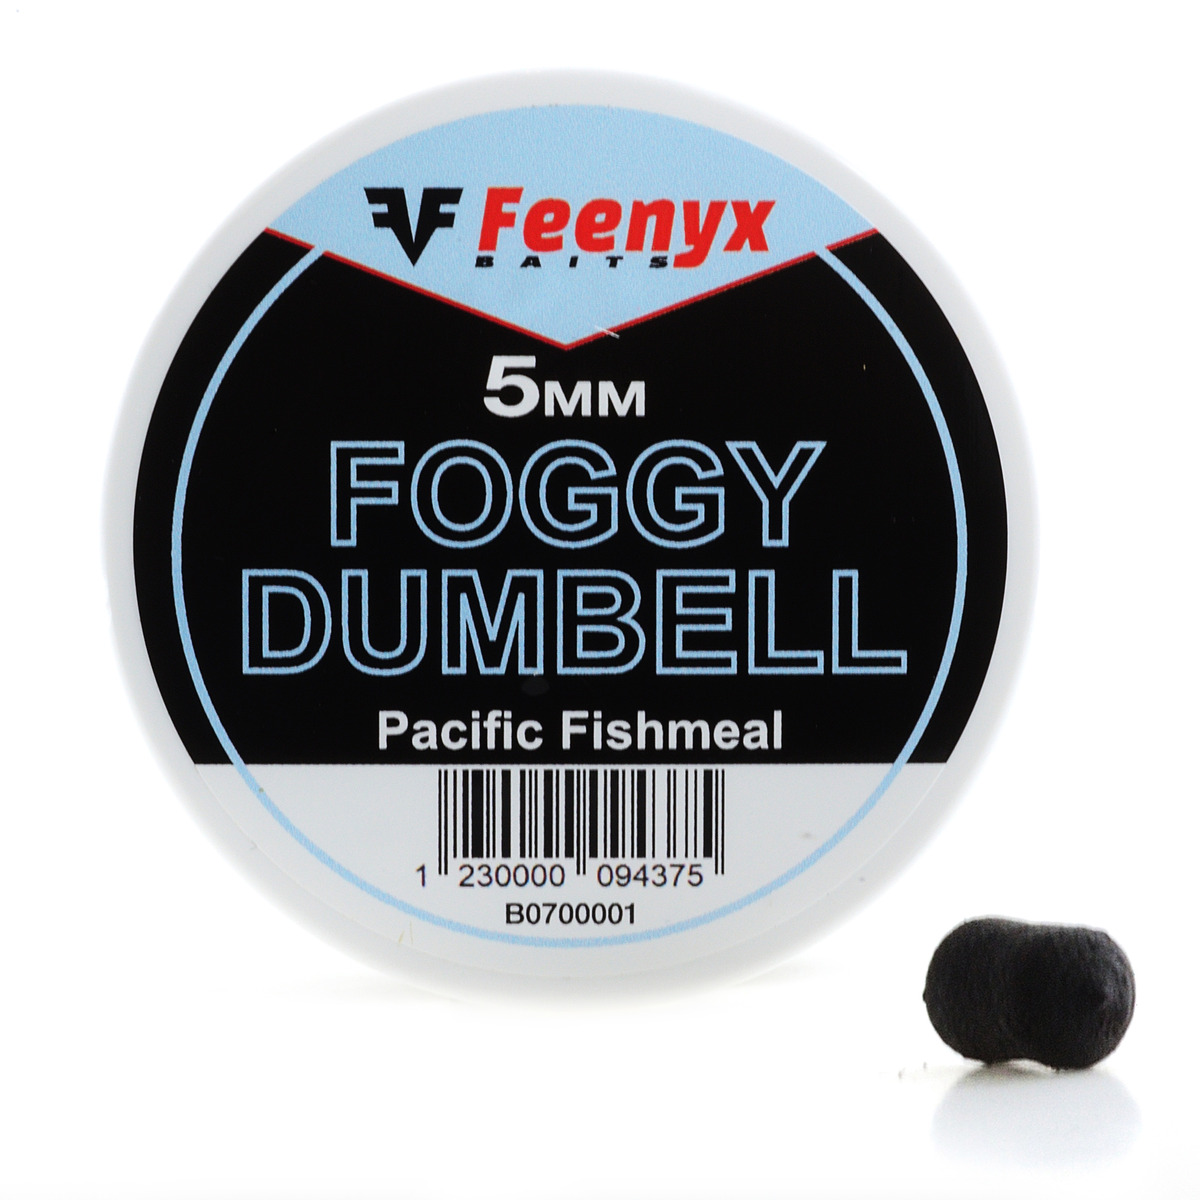 Feenyx Foggy Dumbell Pacific Fishmeal - 5 mm